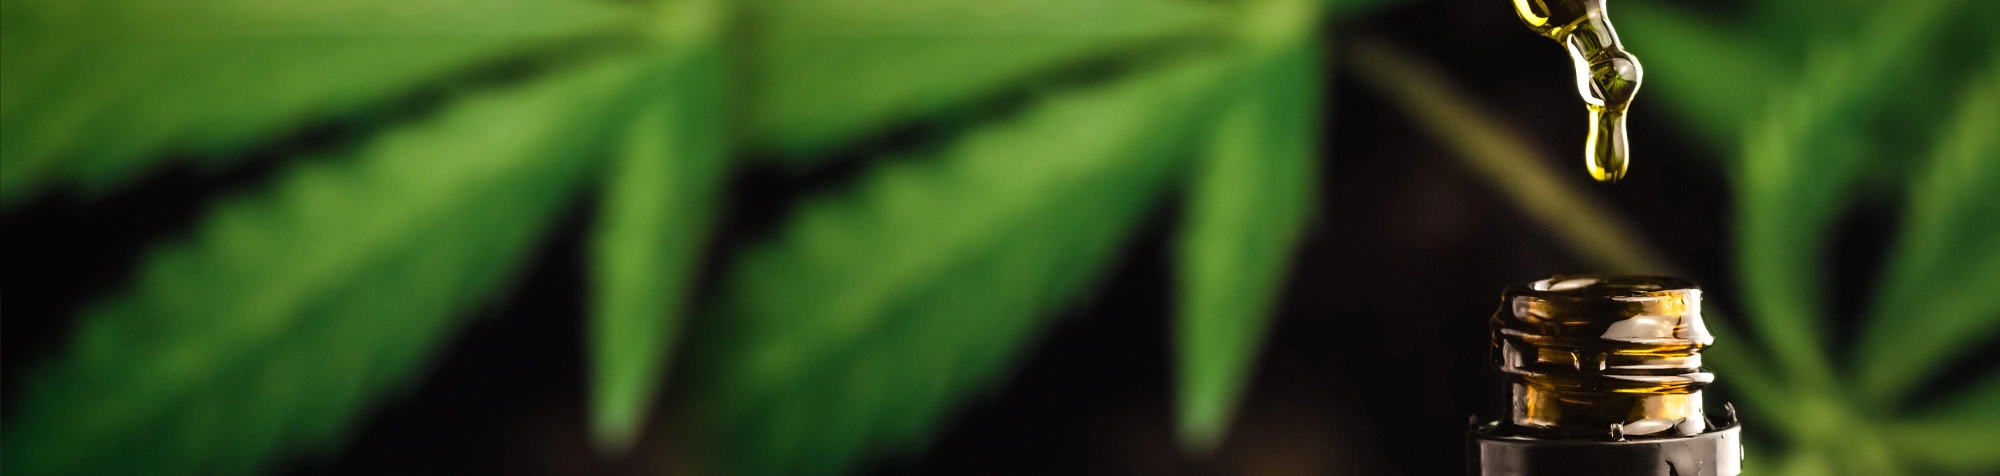 Cannabis hemp banner image